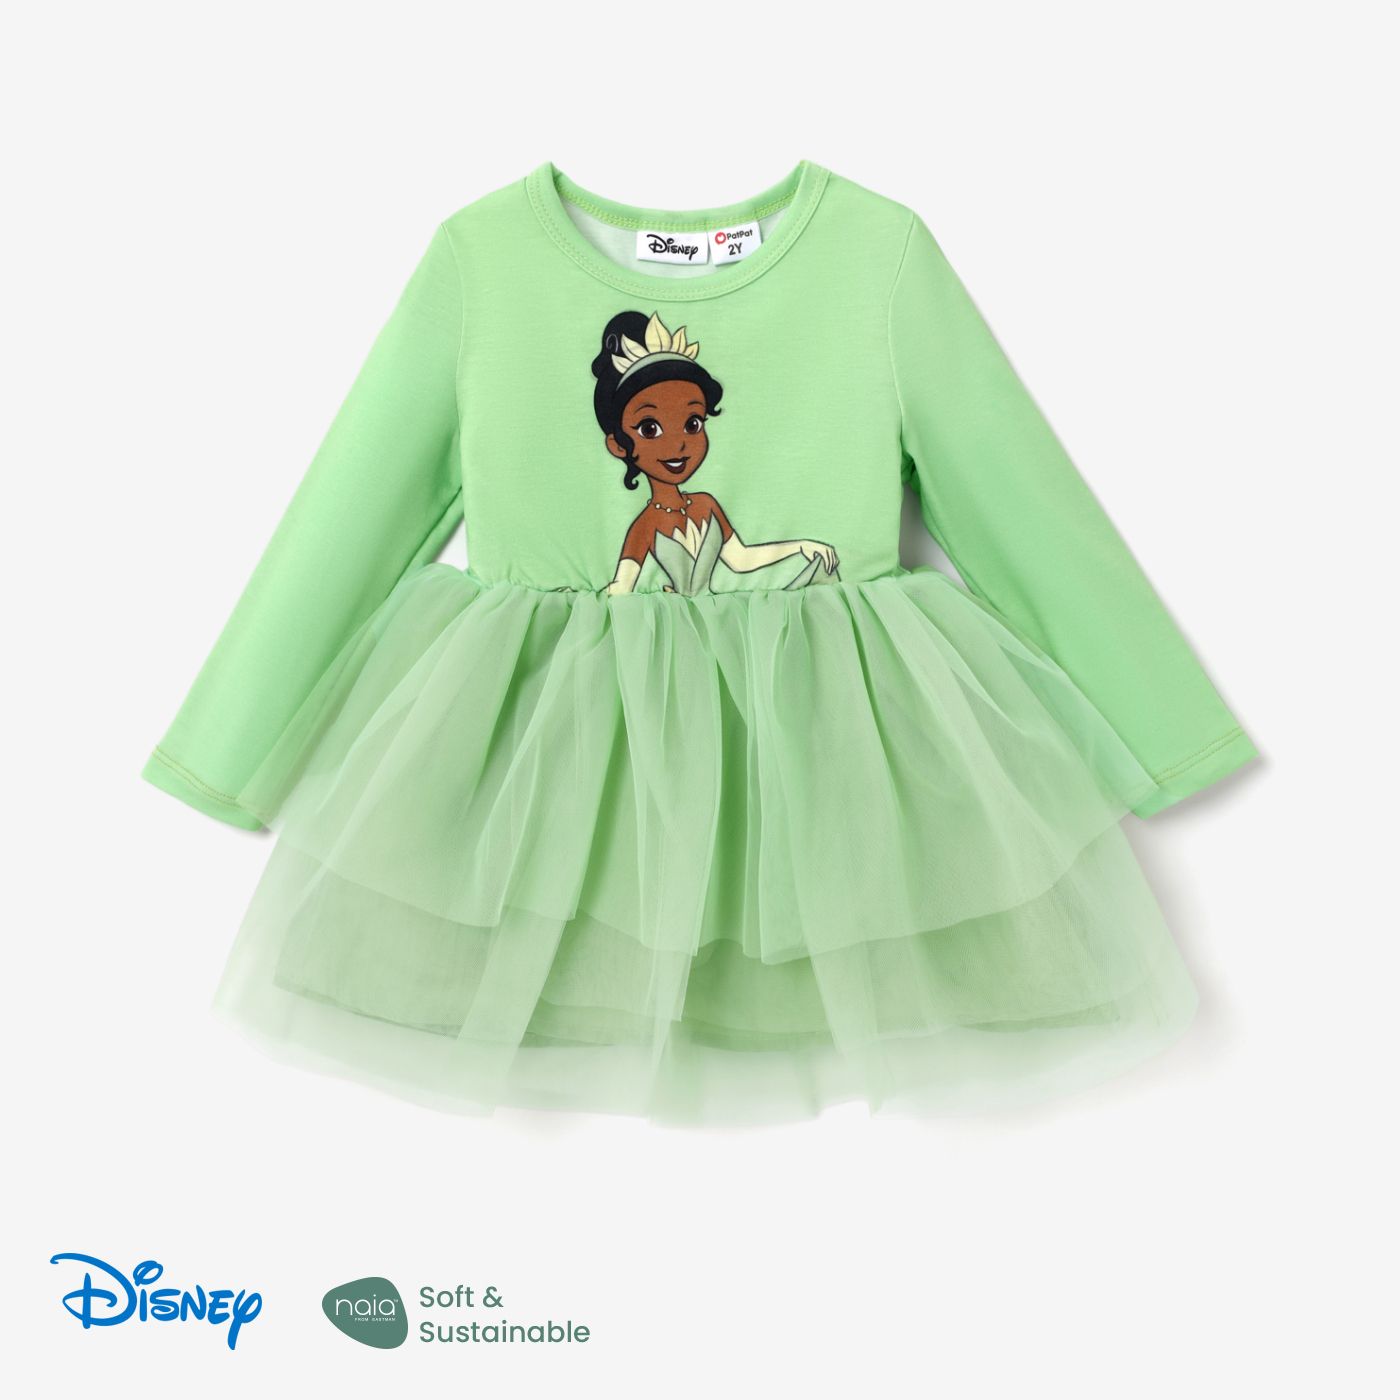 Disney Princess Toddler Girl Character Naiaâ¢ Print Long-sleeve Mesh Overlay Fairy Tulle Dress